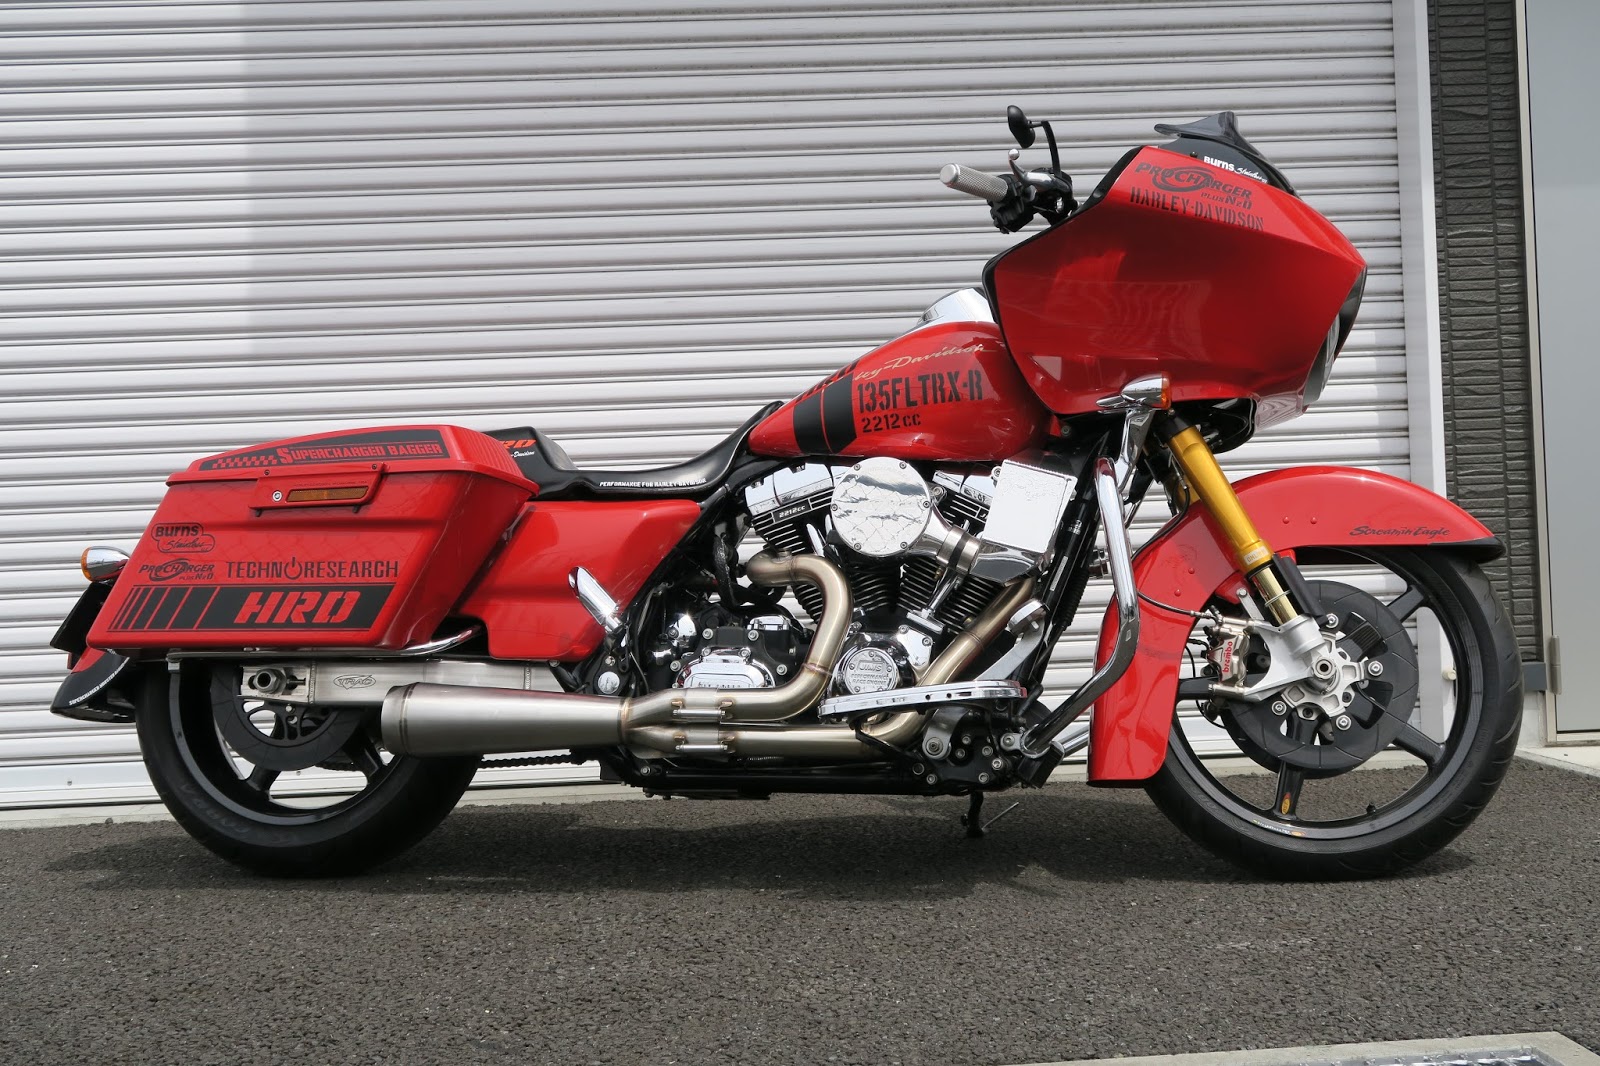 Burns Stainless LLC: No Holds Barred” Harley Davidson Big-Inch V-Twin